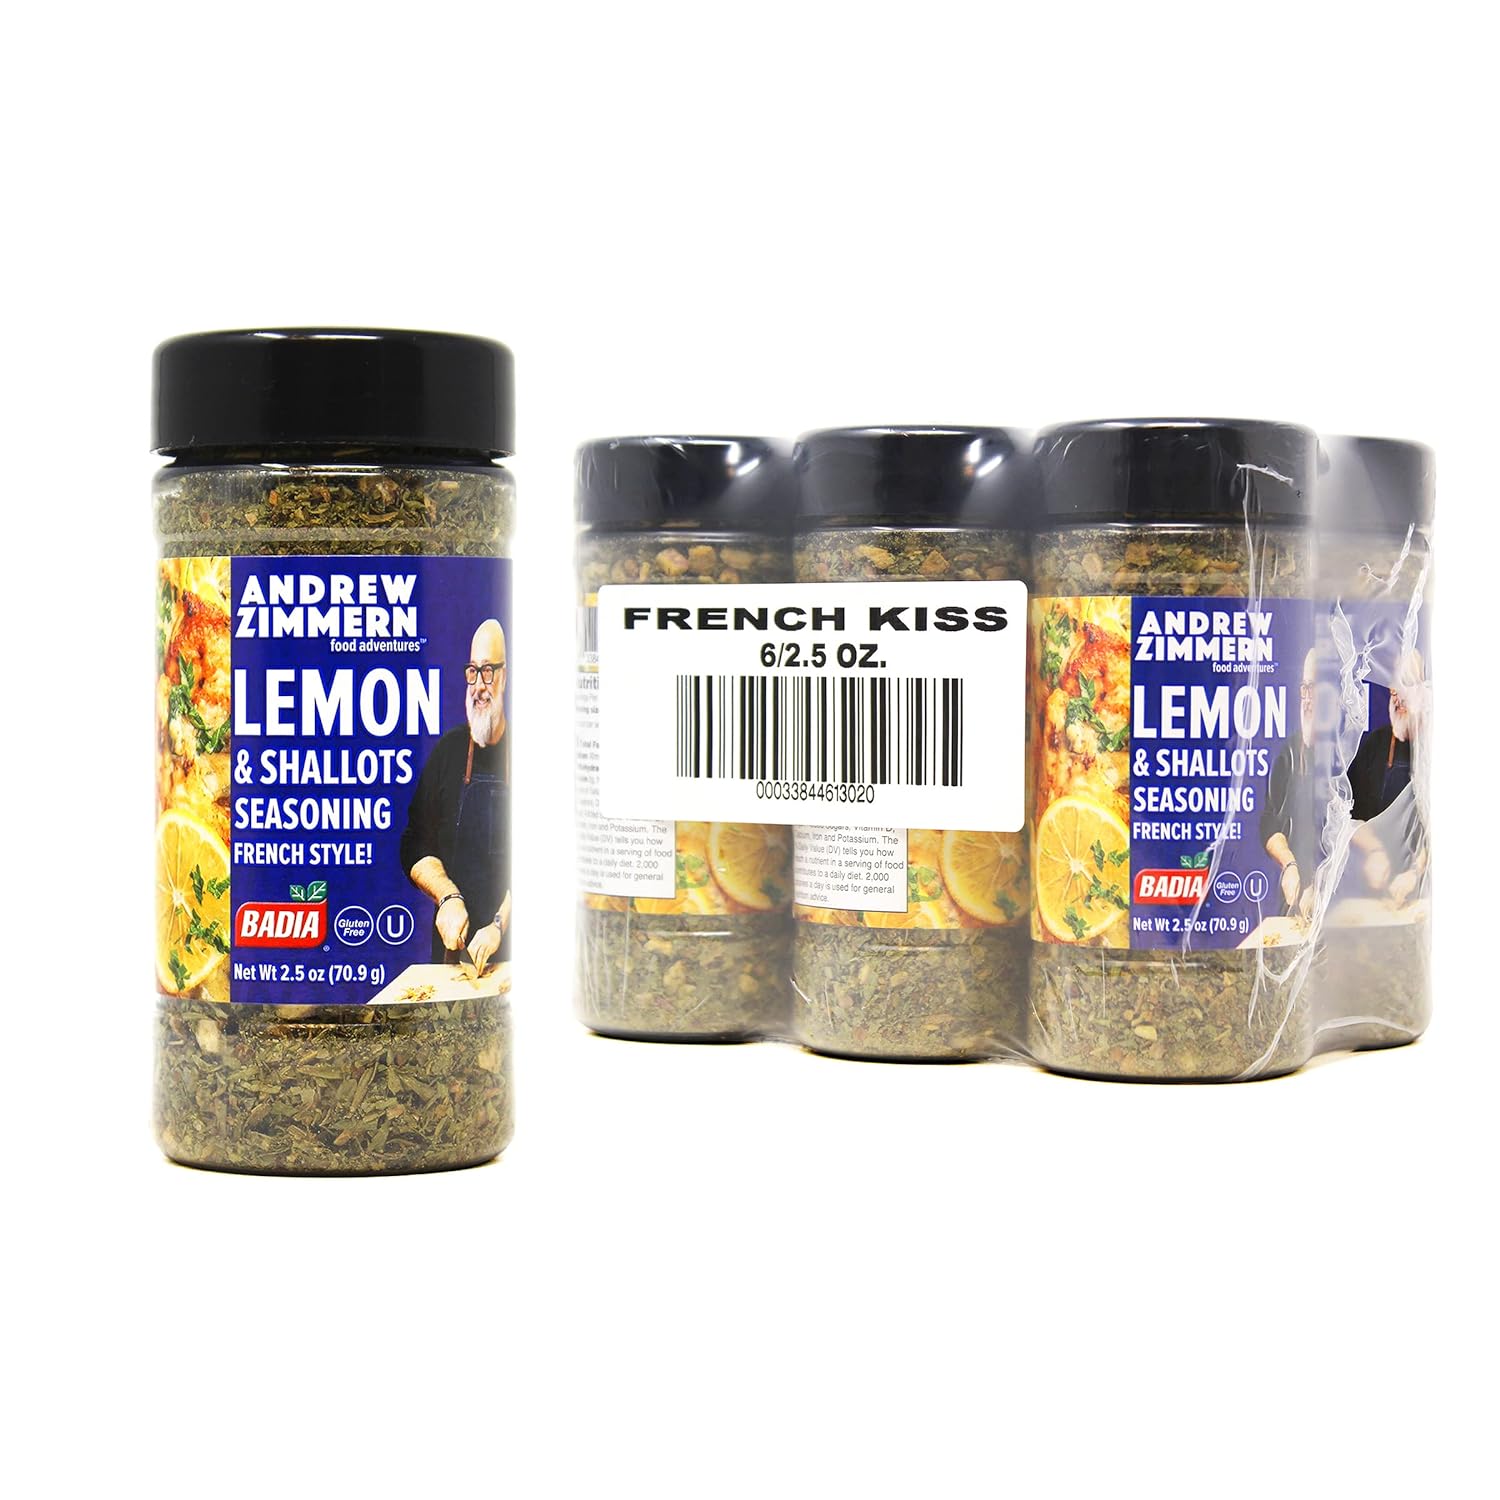 Badia Andrew Zimmern Lemon & Shallots Seasoning French Style (French Kiss), 2.5 oz (Pack of 6)